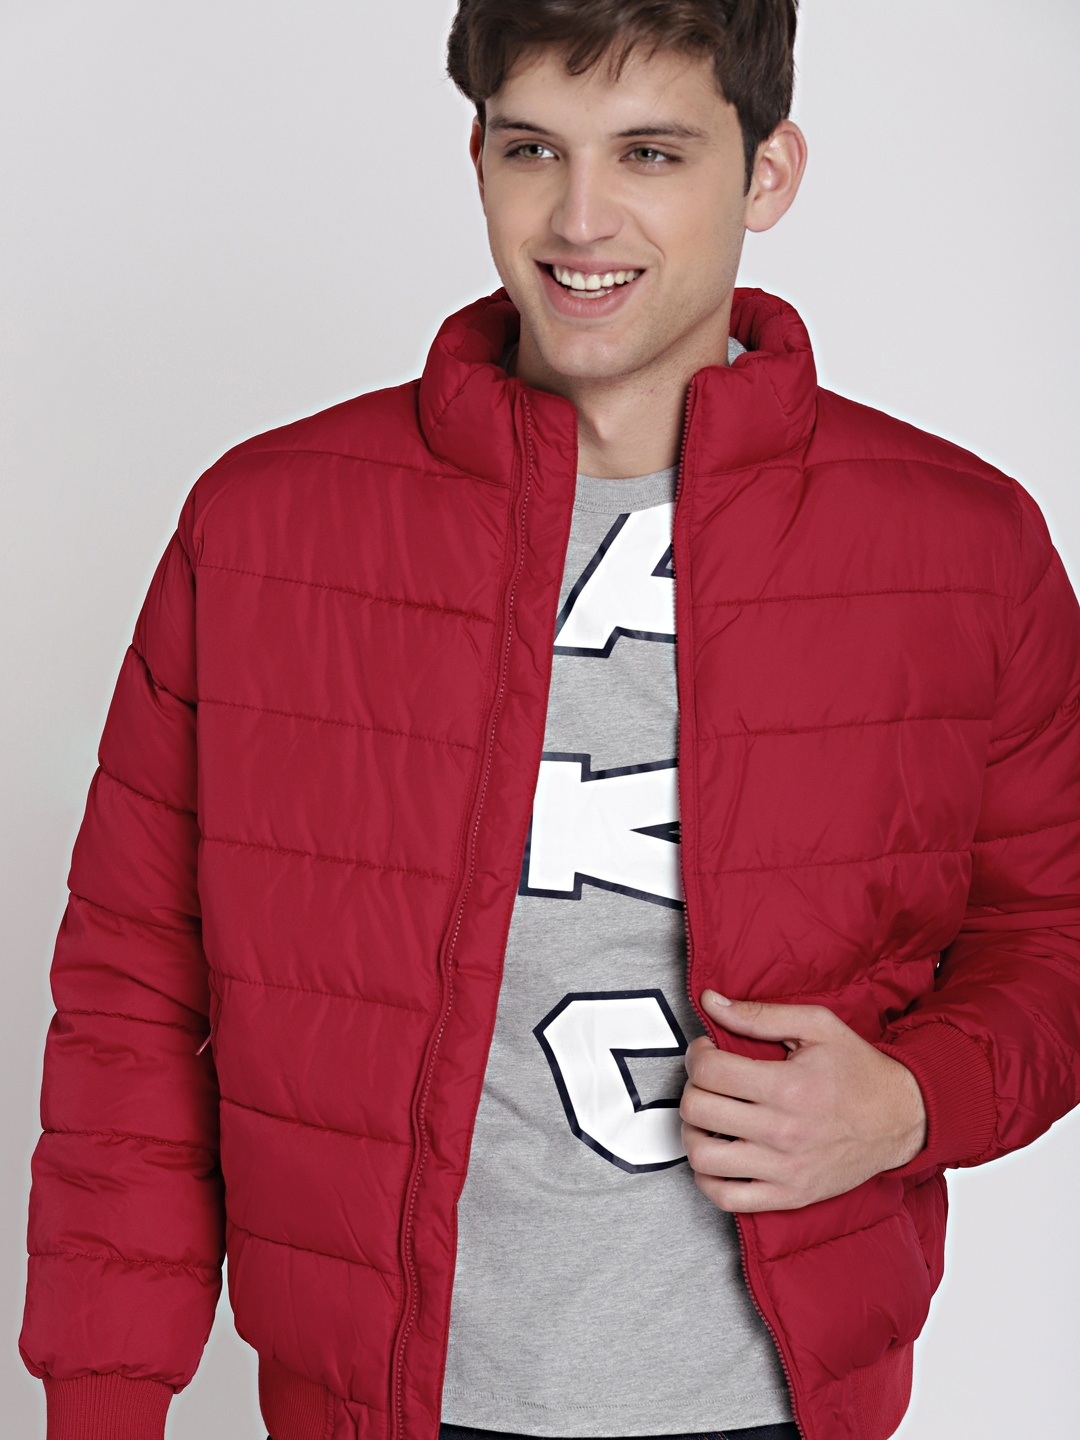 gap warmest jacket